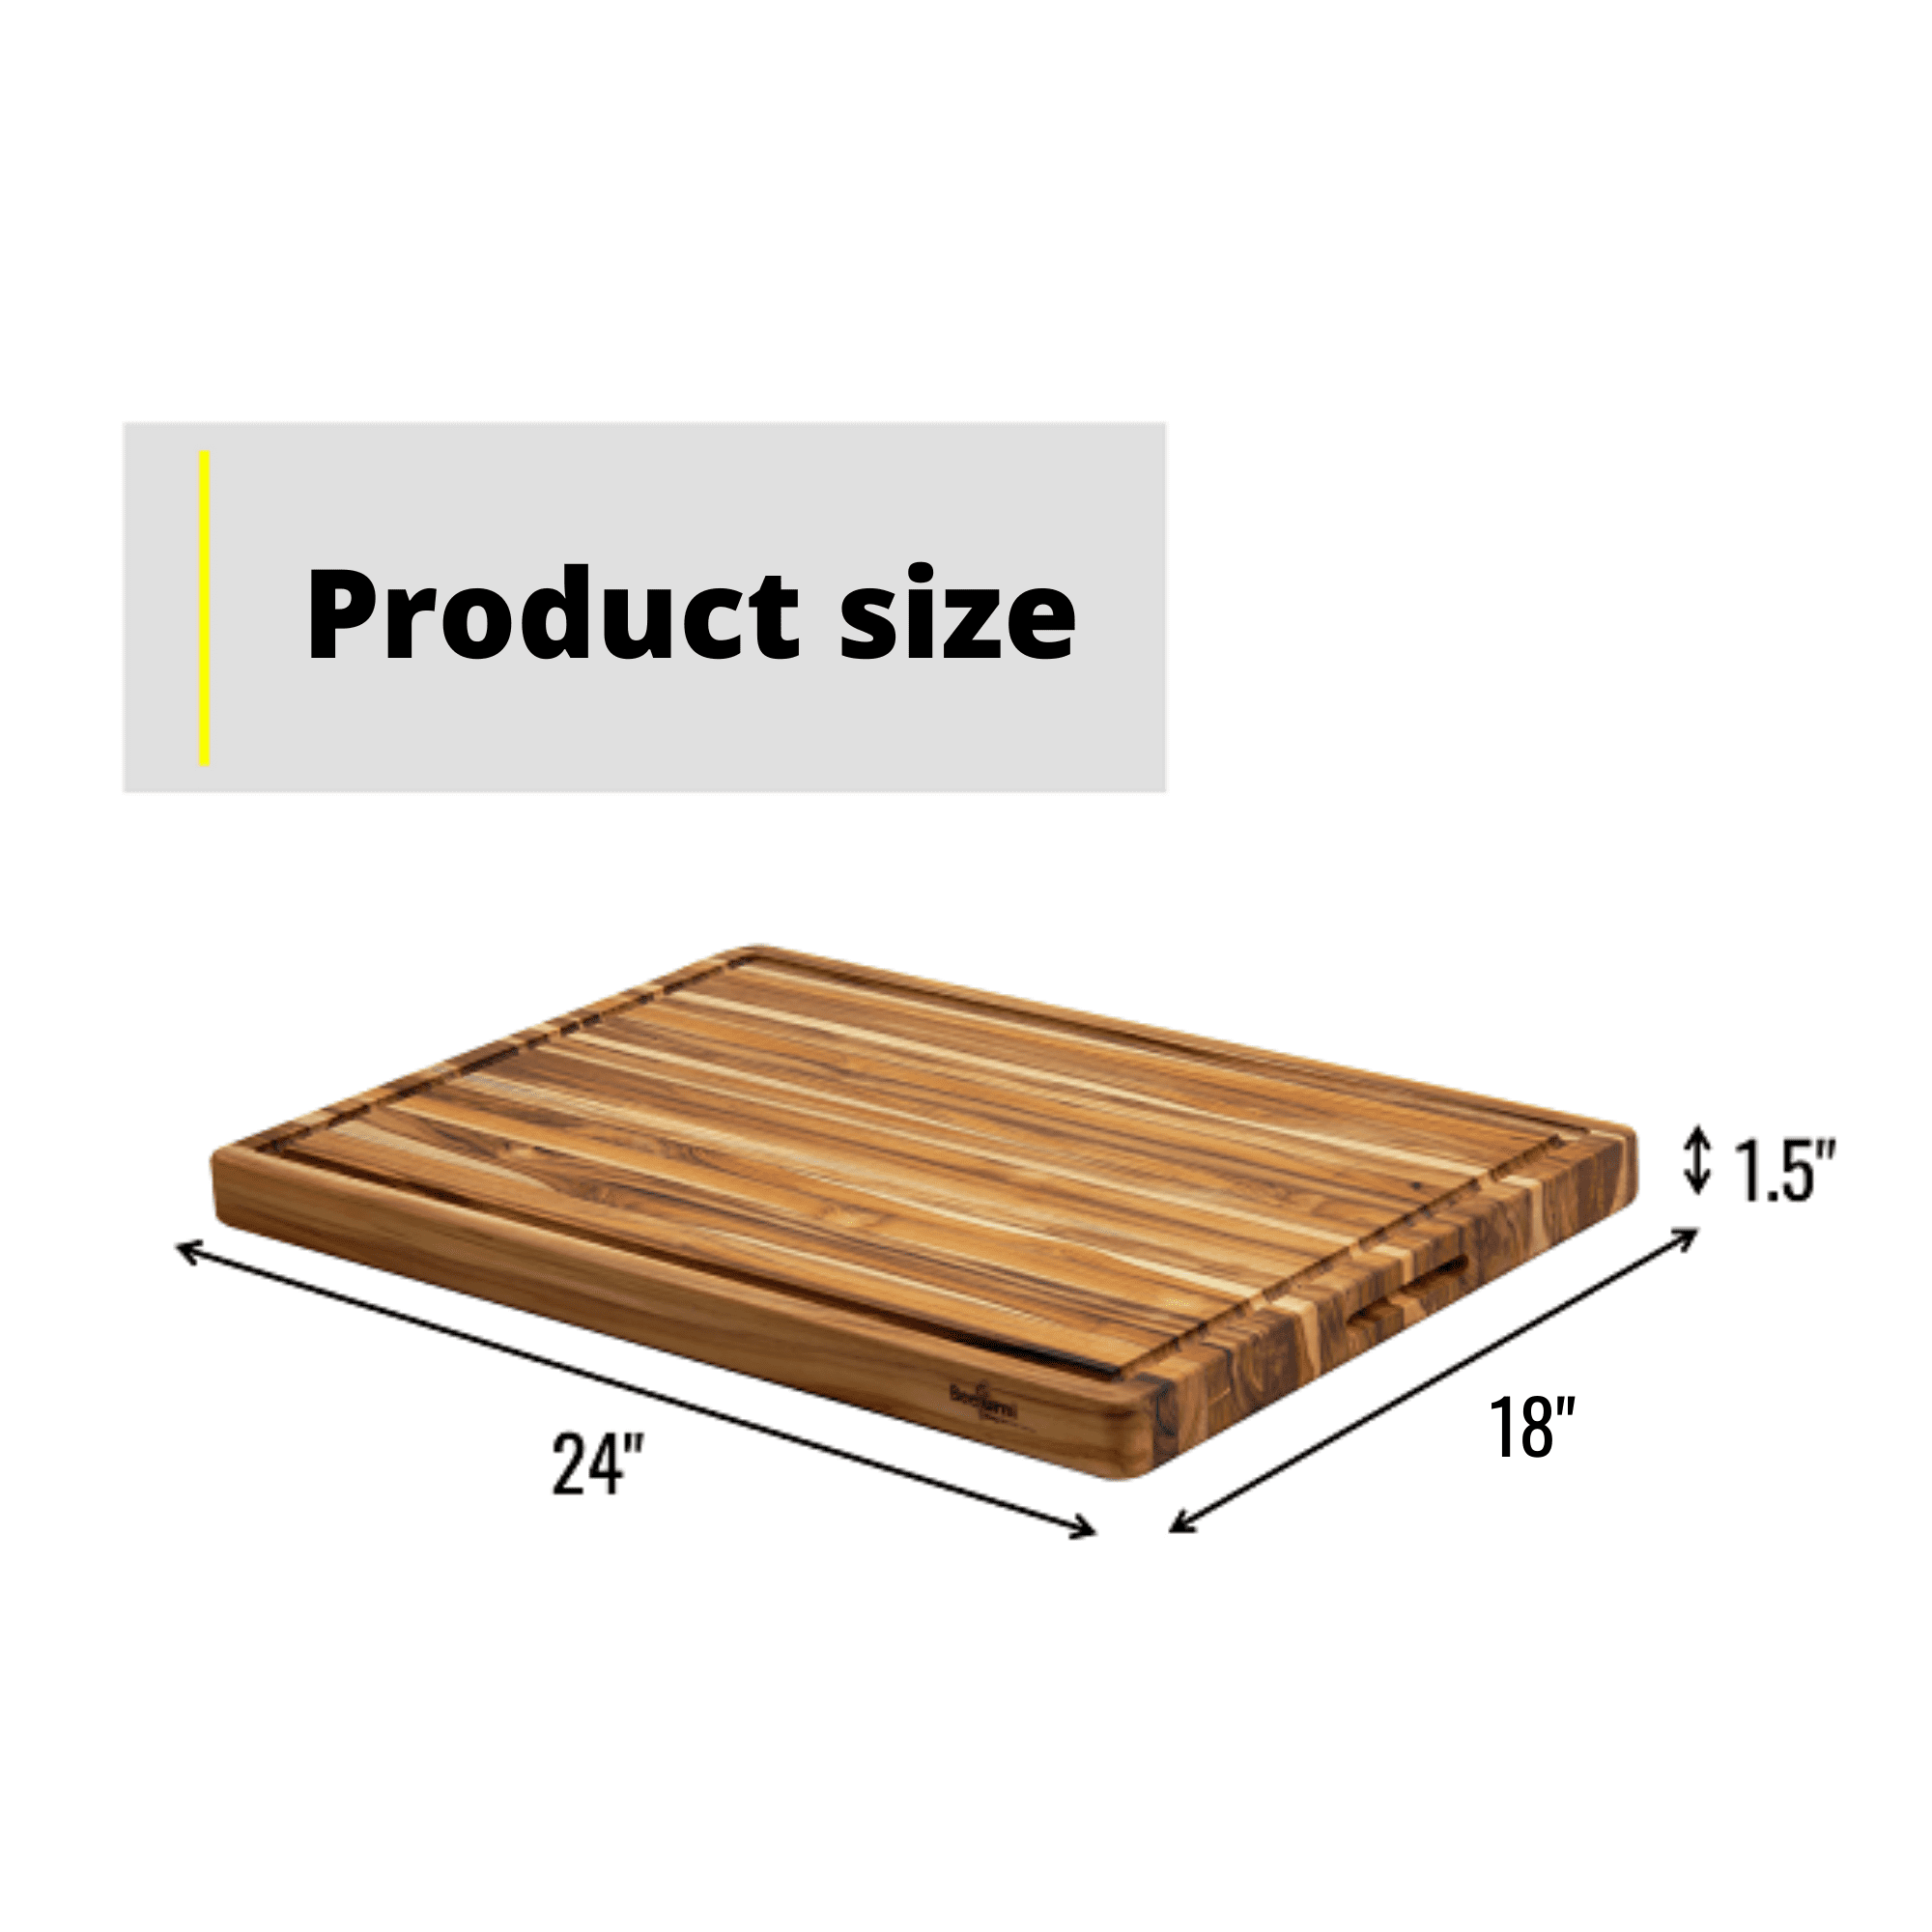 cutting board, teak 11.5x13.5 - Whisk